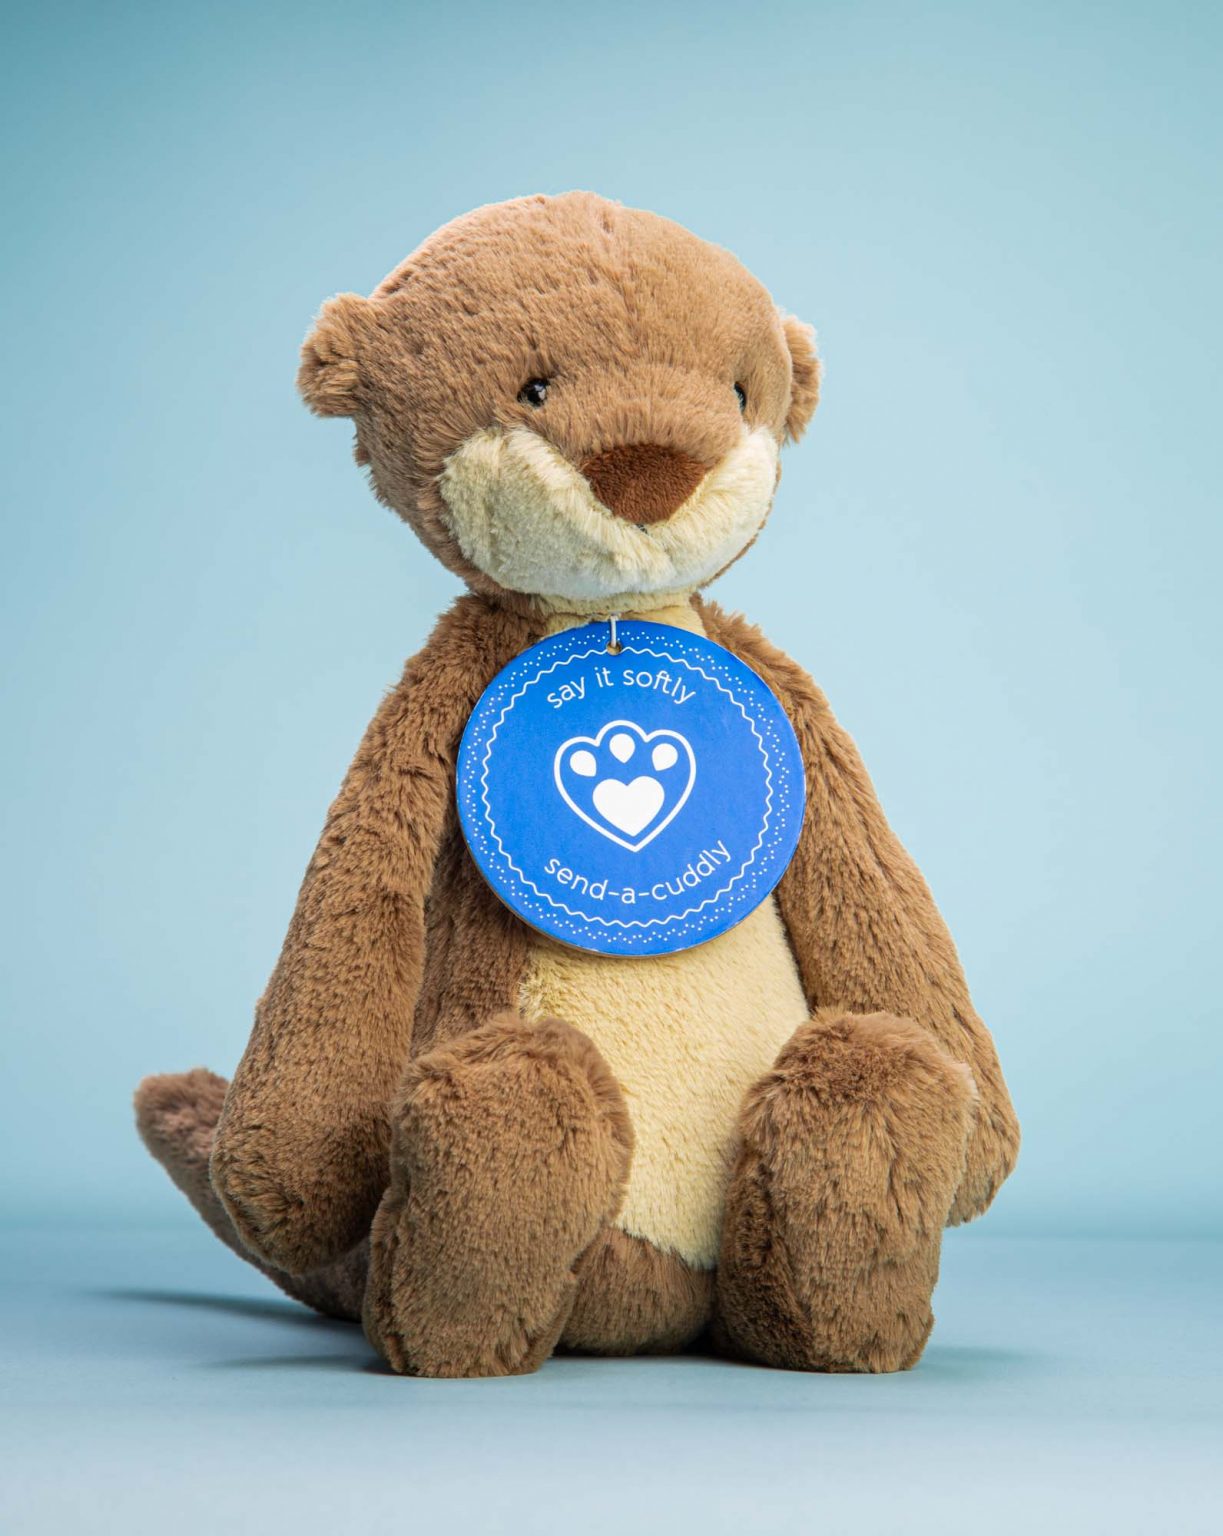 Jellycat Otter Soft Toy Gift - Send a Cuddly